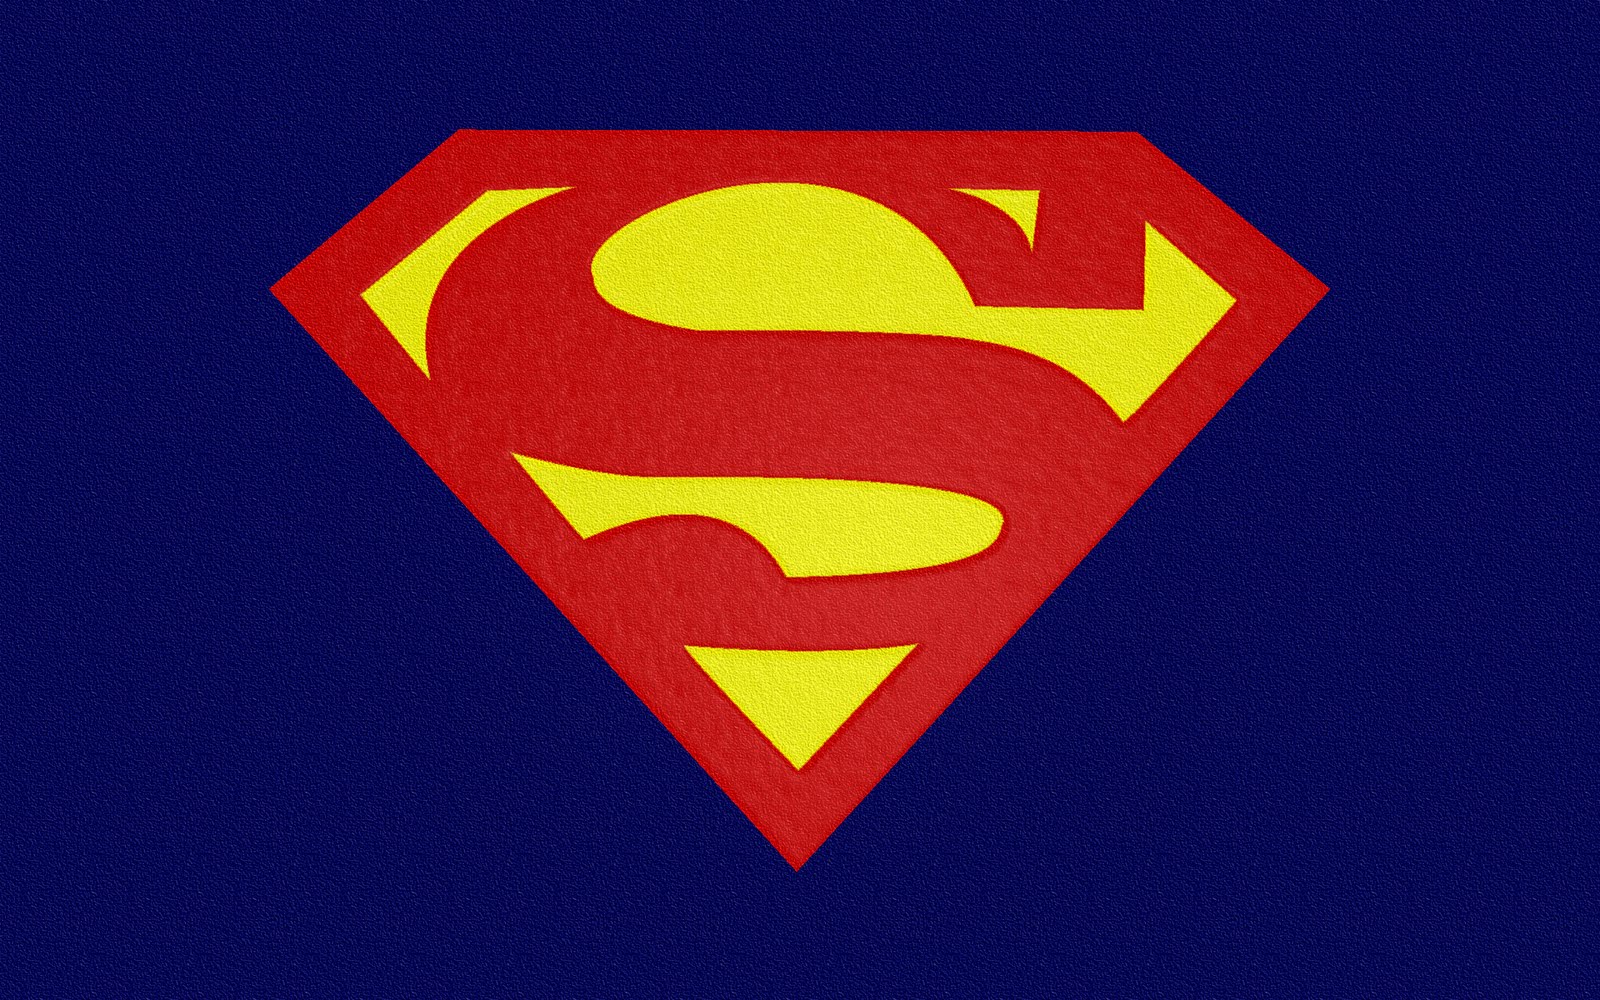 https://blogger.googleusercontent.com/img/b/R29vZ2xl/AVvXsEhrjRO_ueriTLp0j28JaVUtVgQ9tQIPlYBcFCecnmaZy2eIquq2w886GzWNbmR98OHGBJ8xBKEN0h4xiJUOc1jAY5rIKzolcKowcZLQCyWtlGdnW7T9lImA0Bj1WC6rvyon-ioXqWBUz5A/s1600/Superman_Leather+hd+wallpaper.jpg